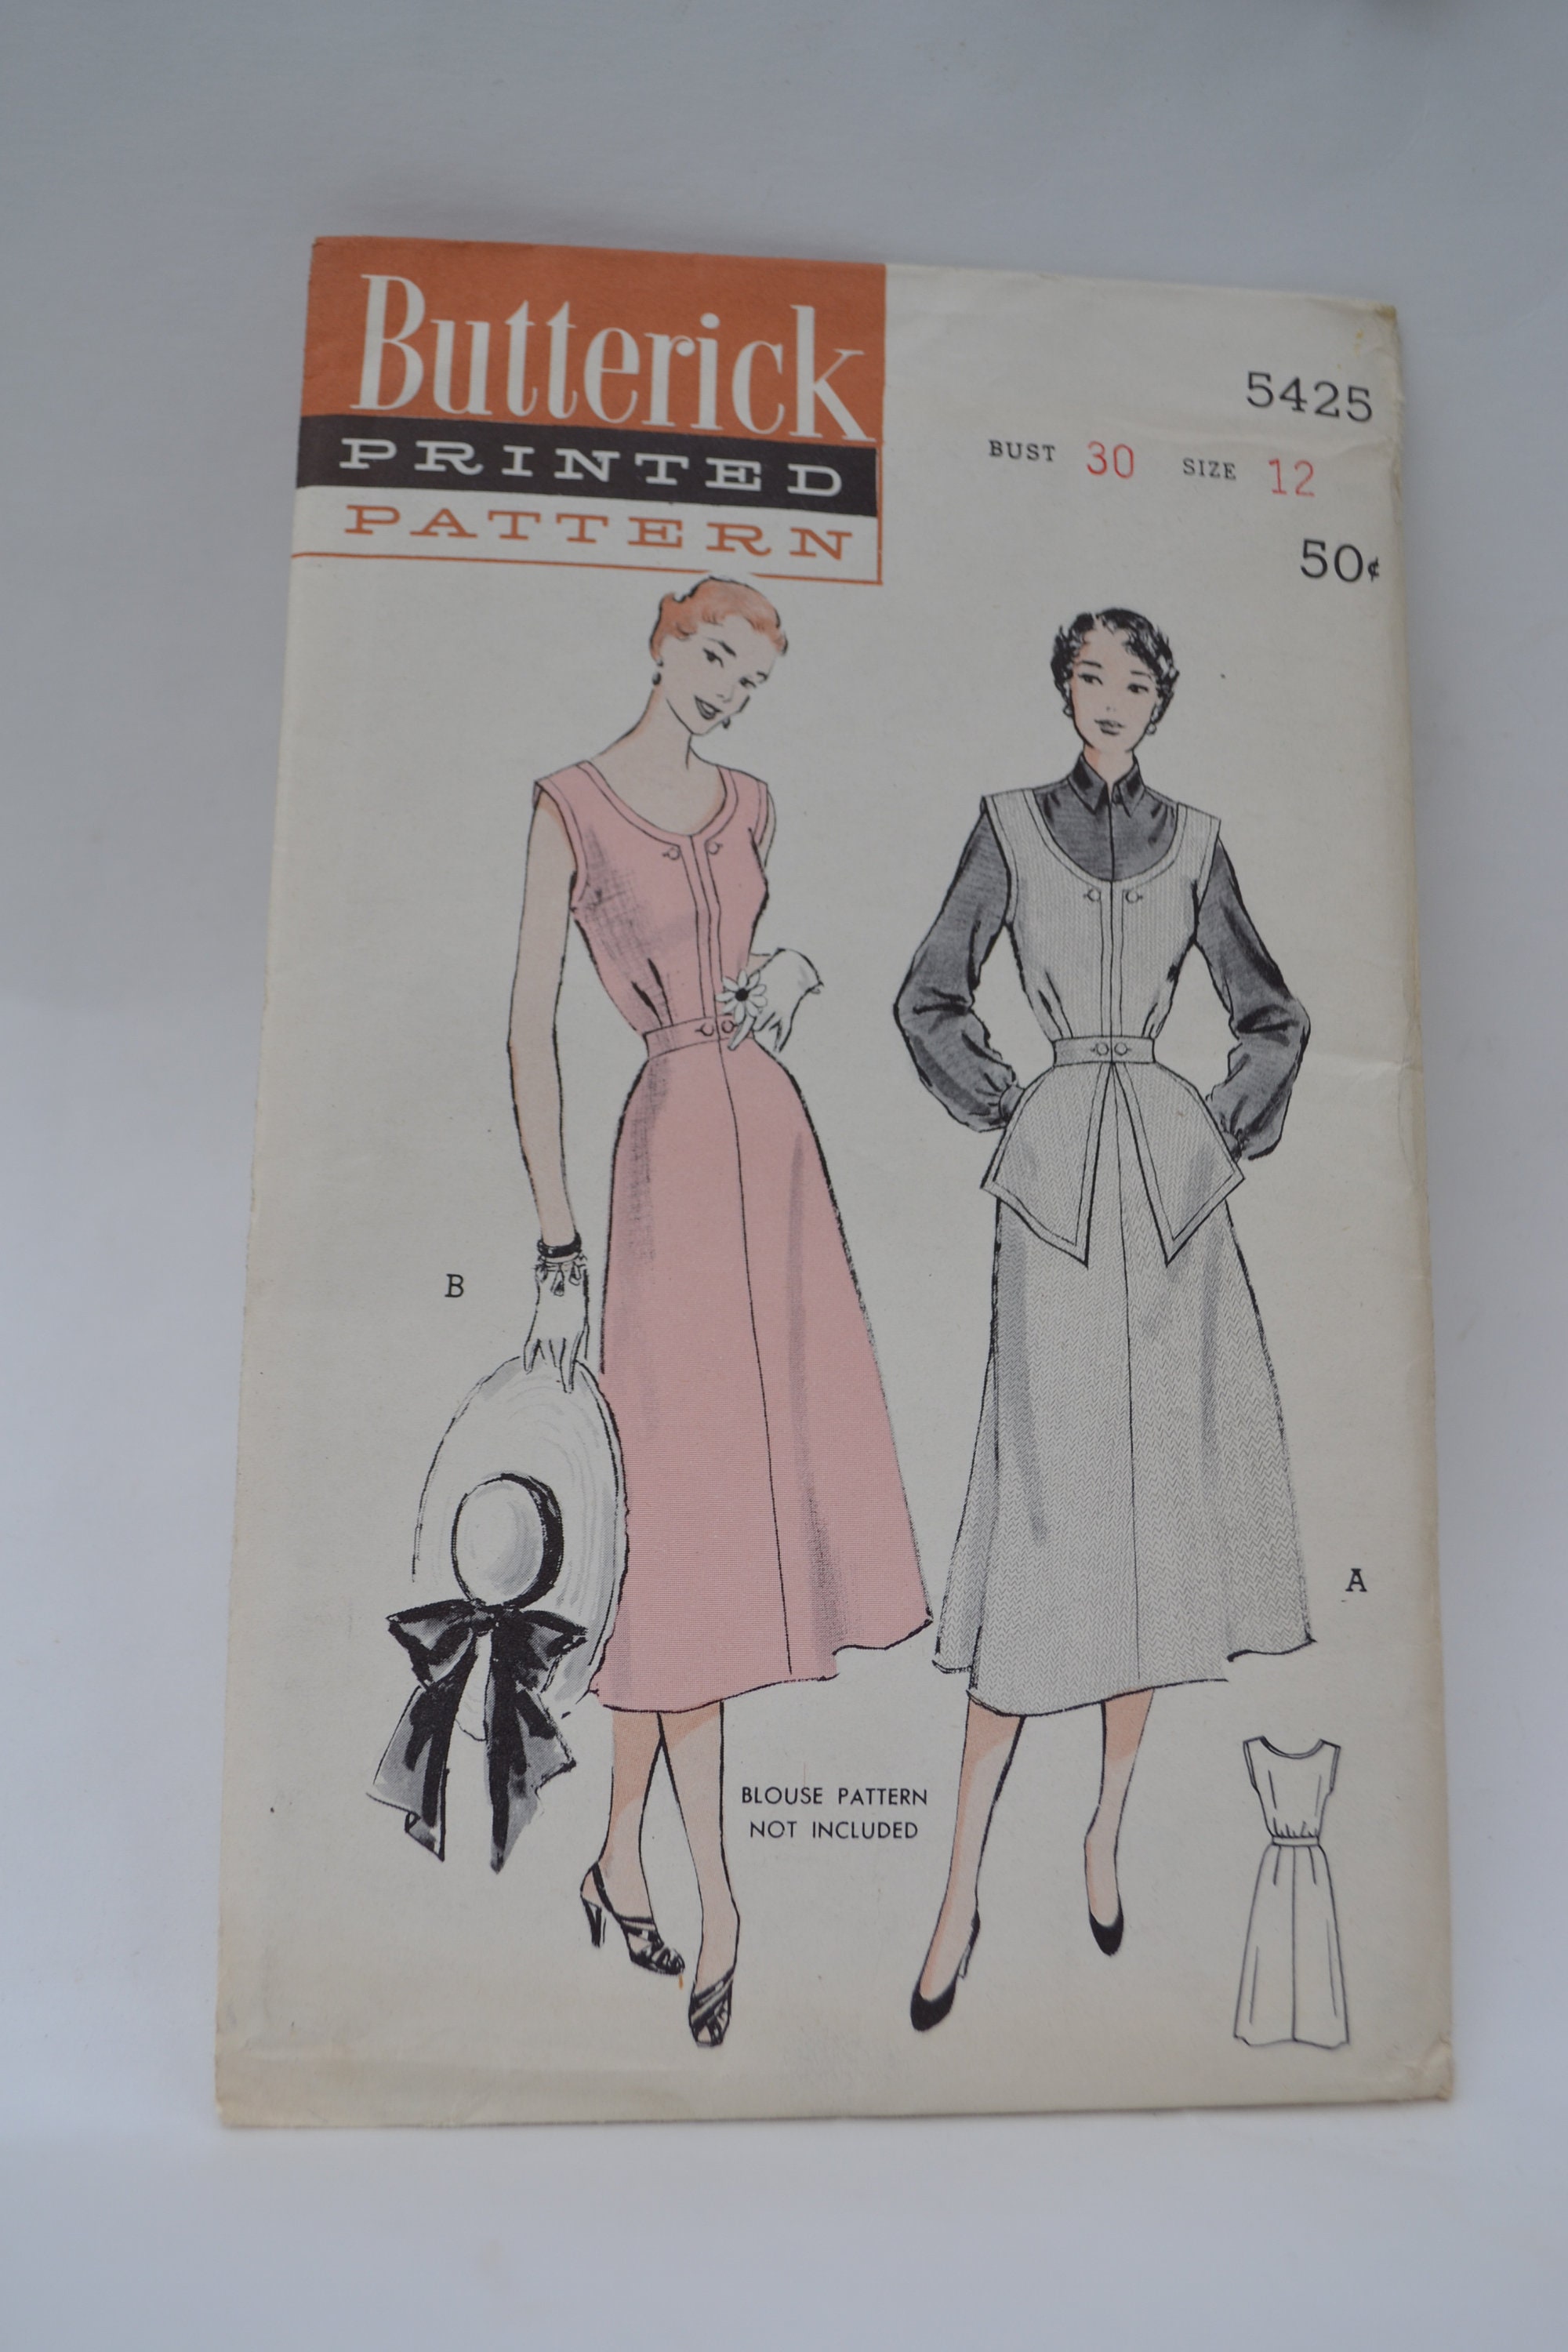 <b>5425</b> BUTERICK 1950 빈티지 프린트 바느질 패턴 원피스 점퍼 또는 민소매 드레스 바스트 30 사이즈 12 언컷